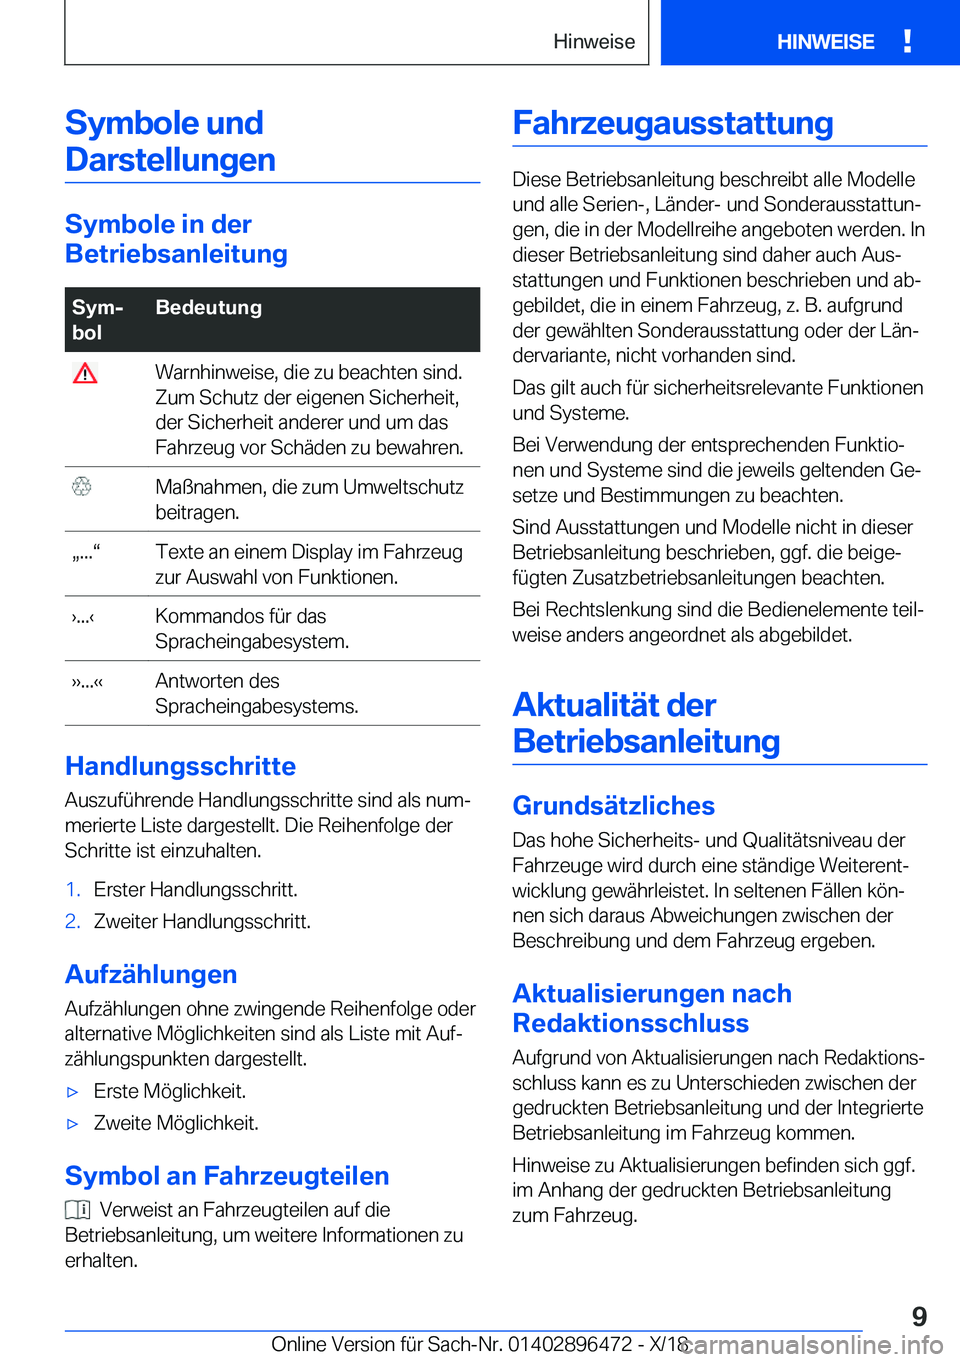 BMW X1 2019  Betriebsanleitungen (in German) �S�y�m�b�o�l�e��u�n�d�D�a�r�s�t�e�l�l�u�n�g�e�n
�S�y�m�b�o�l�e��i�n��d�e�r
�B�e�t�r�i�e�b�s�a�n�l�e�i�t�u�n�g
�S�y�mj
�b�o�l�B�e�d�e�u�t�u�n�g��W�a�r�n�h�i�n�w�e�i�s�e�,��d�i�e��z�u��b�e�a�c�h